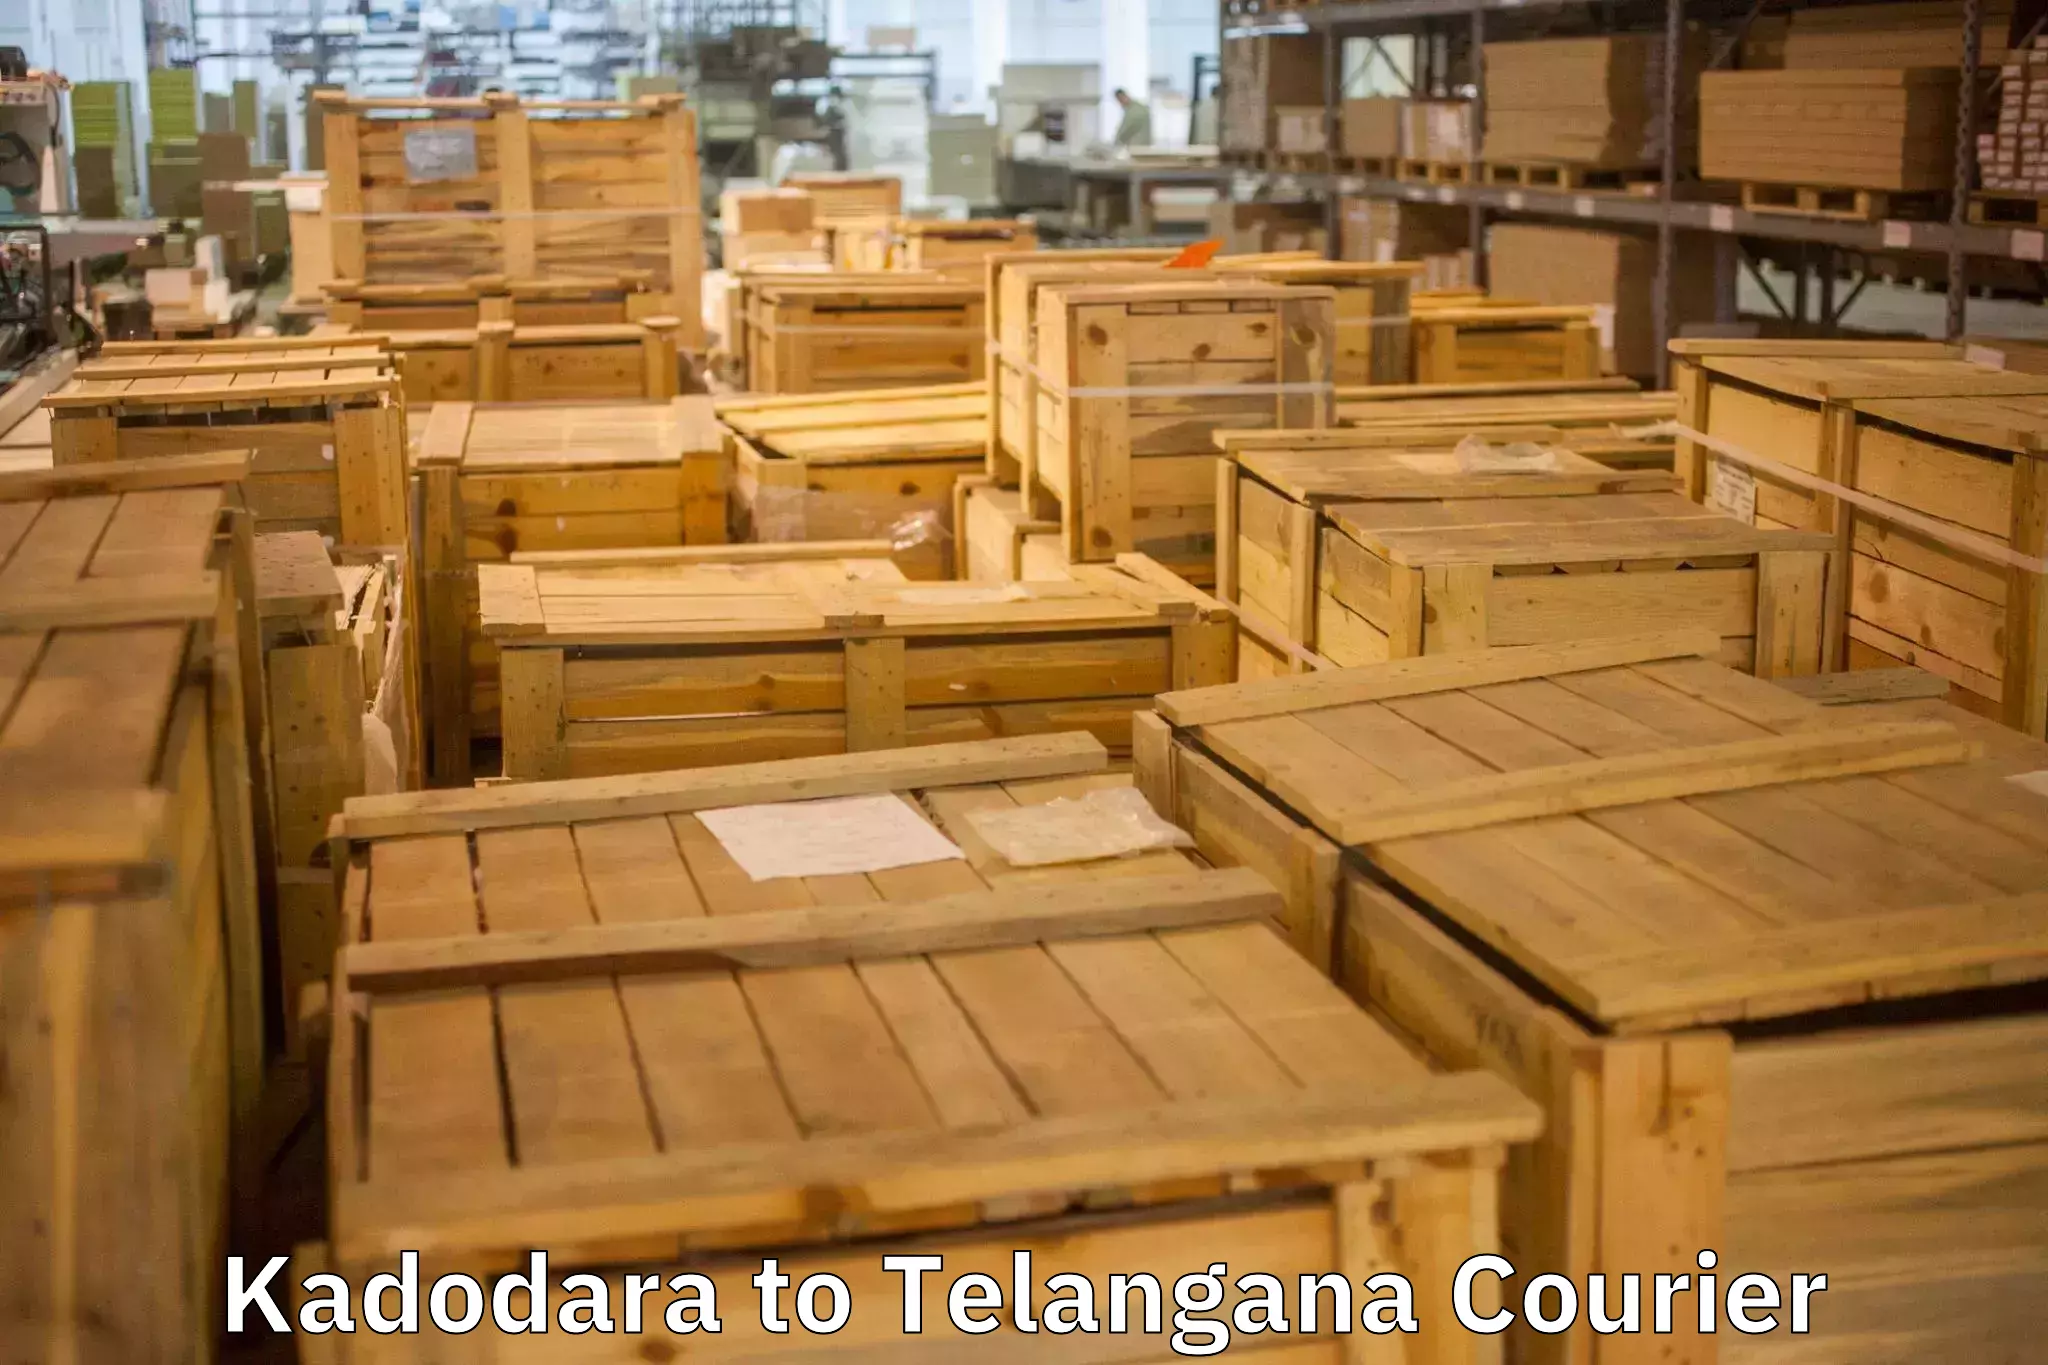 Professional movers and packers in Kadodara to Telangana